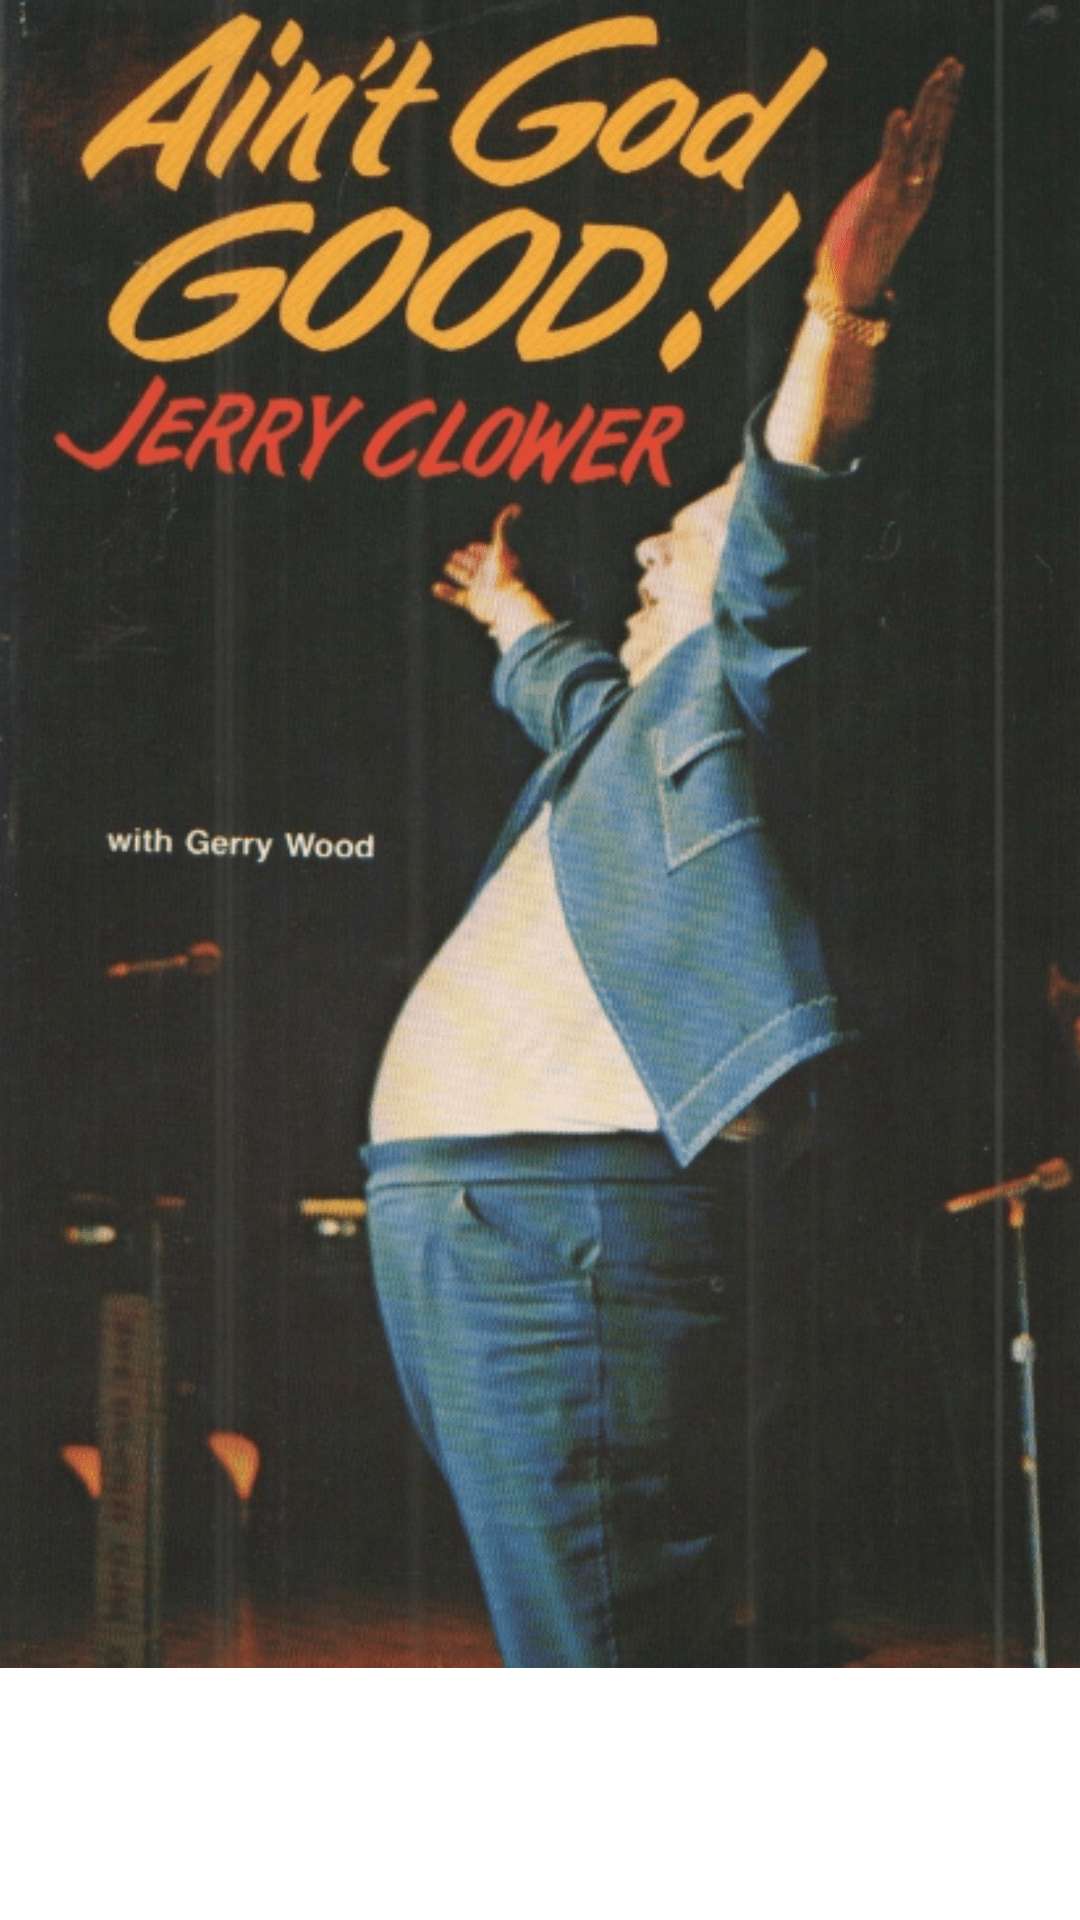 Aint God Good by Jerry Clower